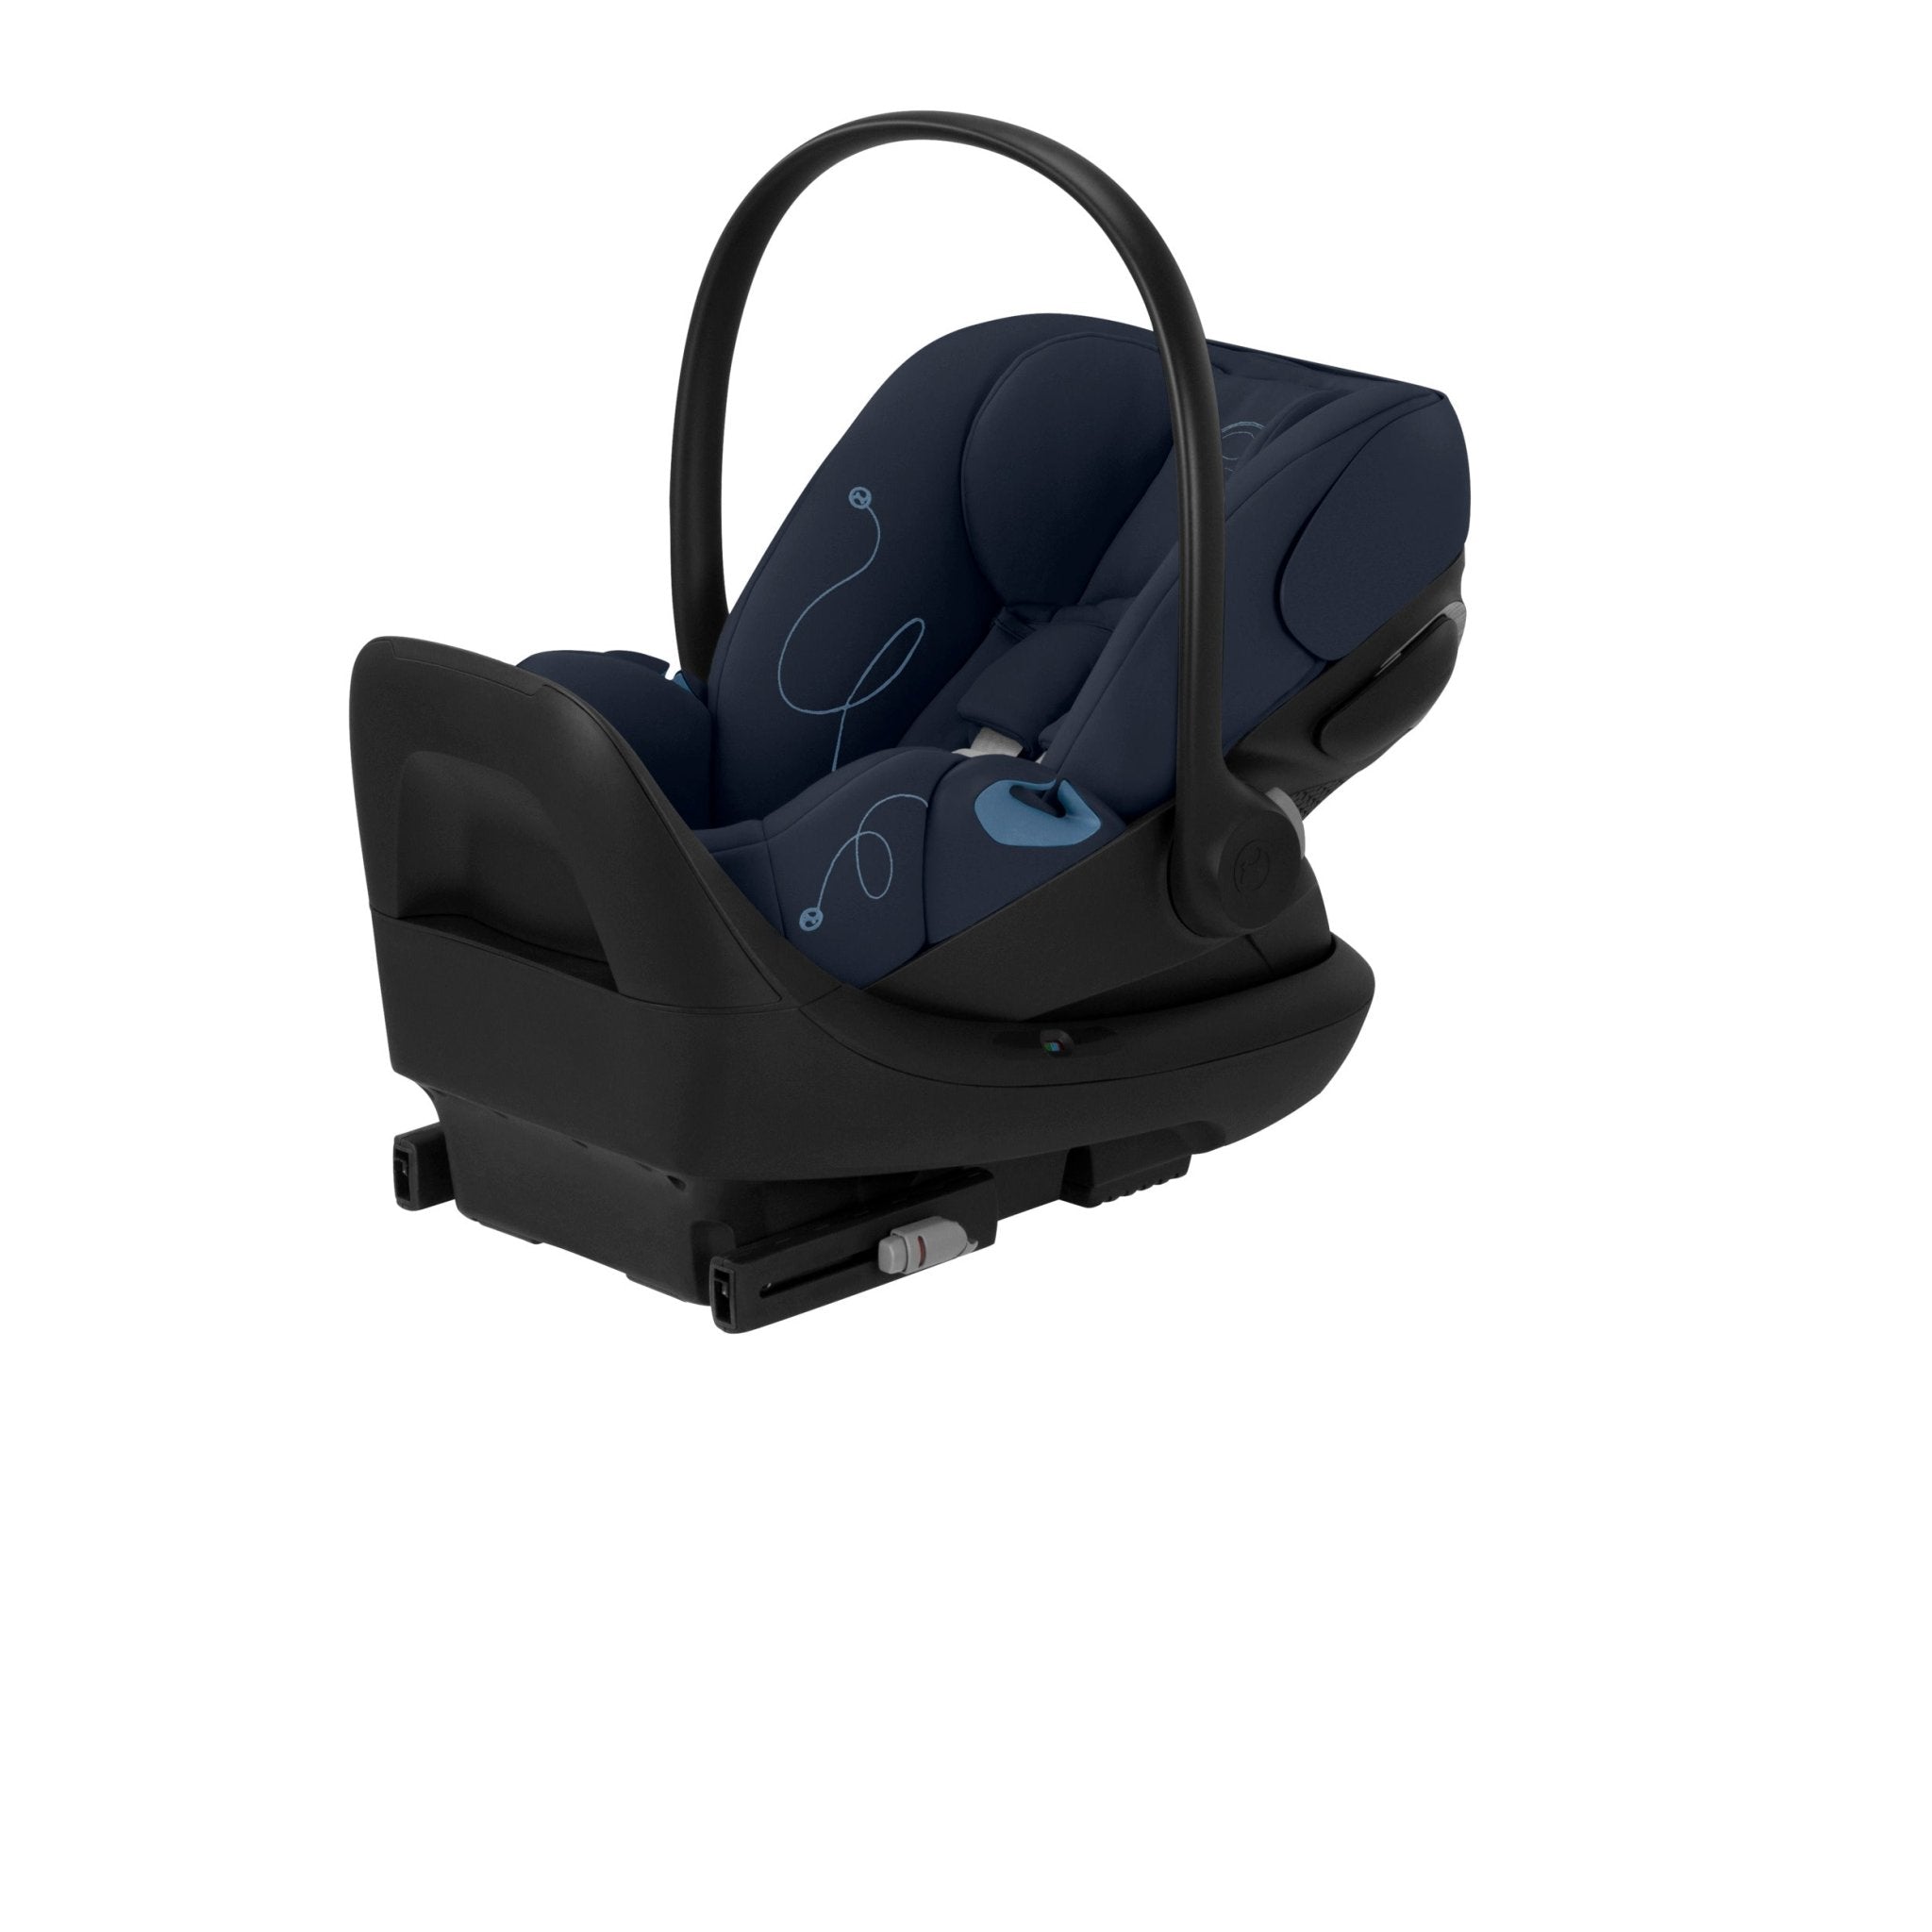 Cybex Cloud G Infant Car Seat - ANB Baby -4063846282630$300 - $500